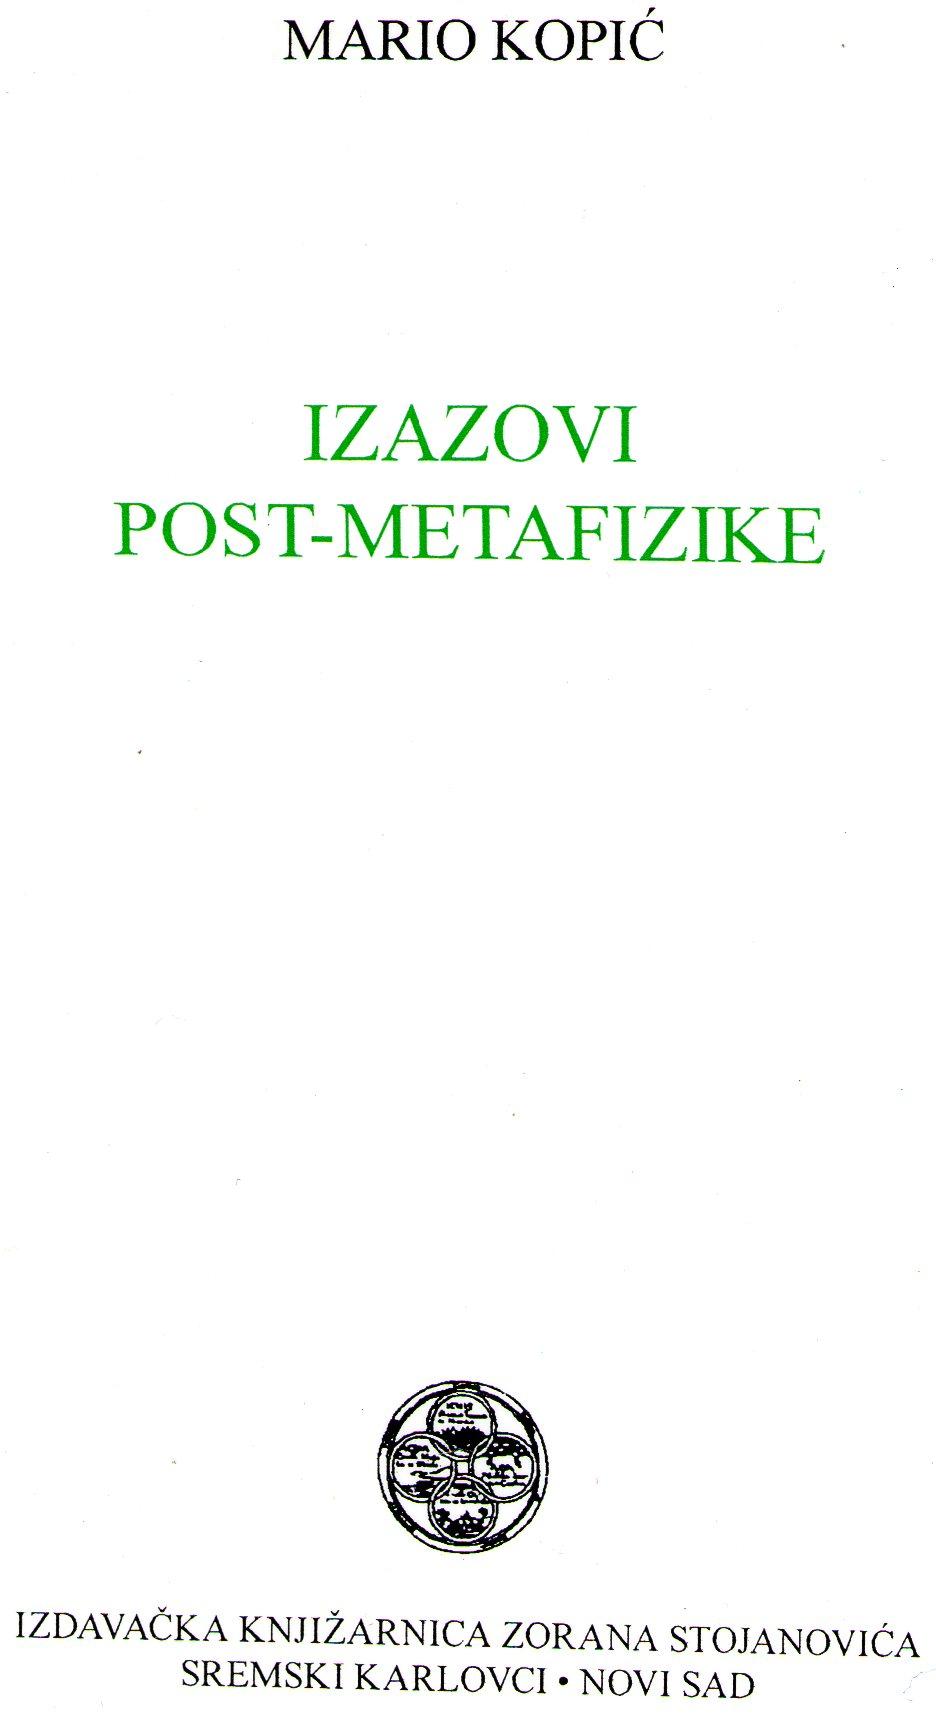 Selected image for Izazovi post-metafizike - Mario Kopić